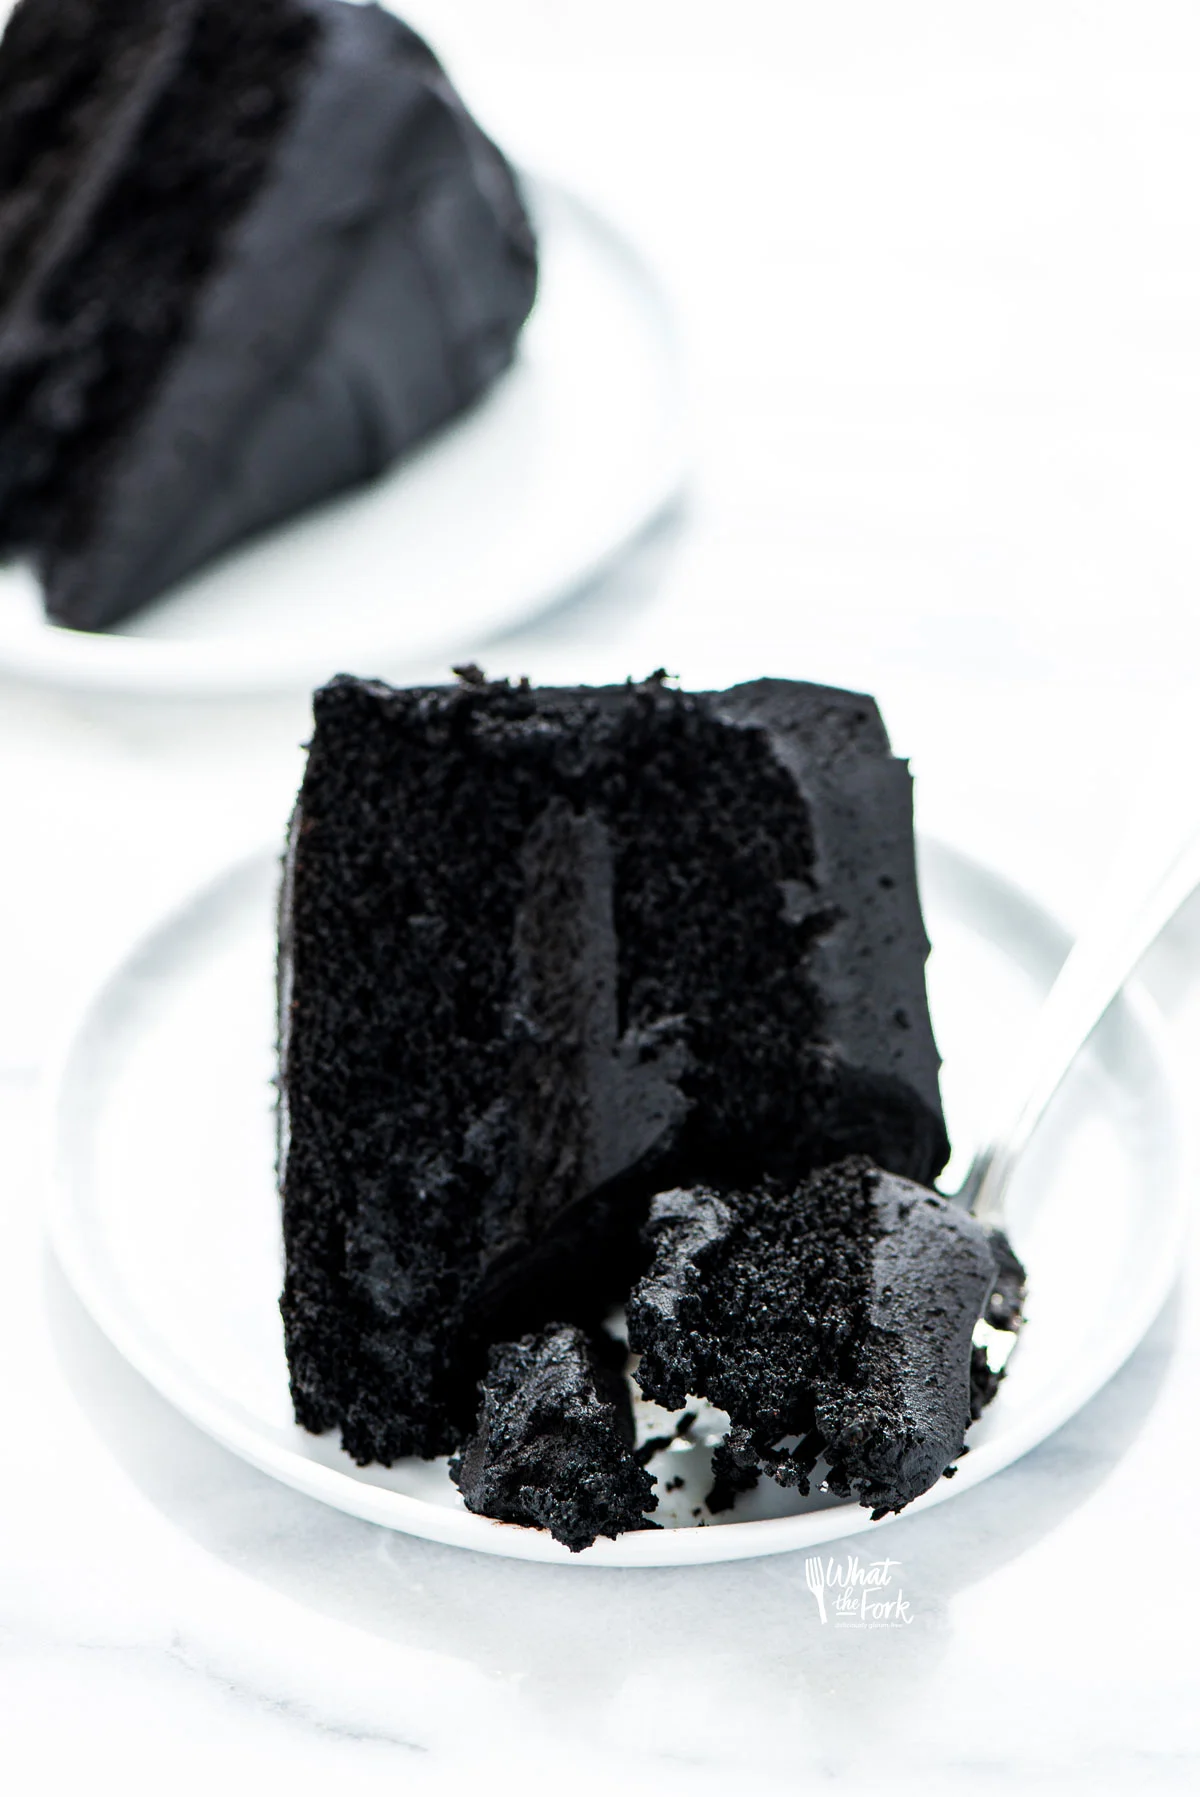 Black Velvet Cocoa Powder - Peru Origin - 396g by Cake Craft Company